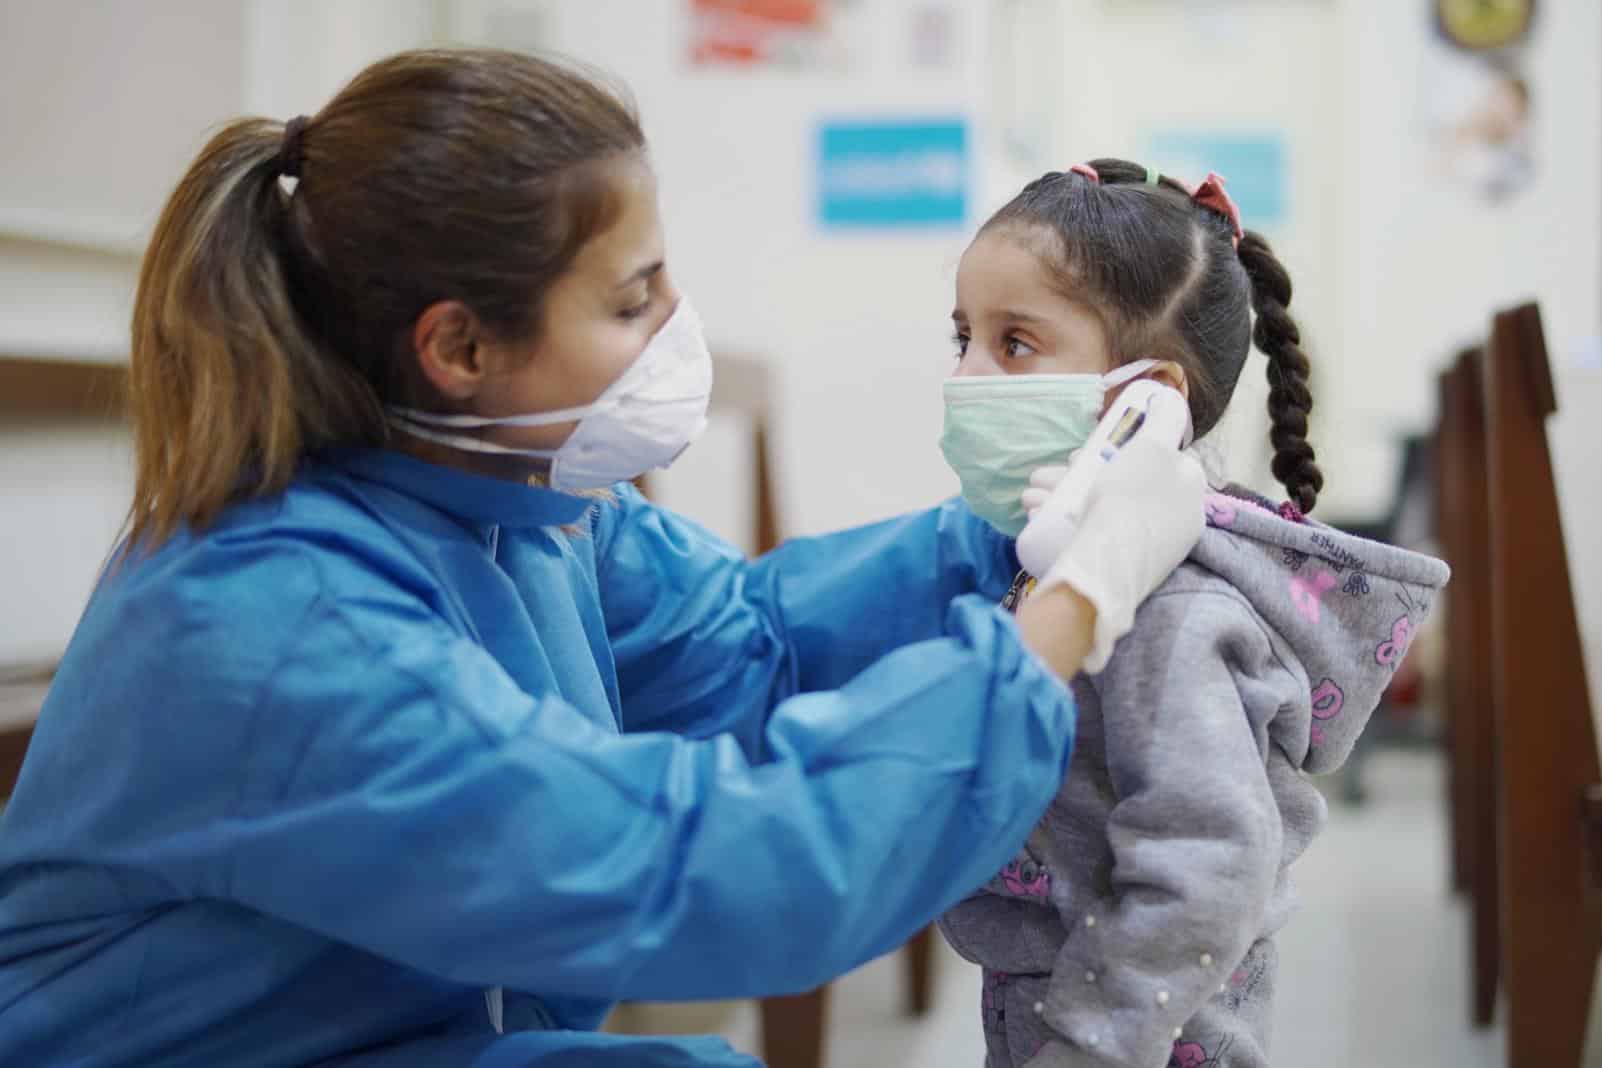 Medical volunteer putting a mask on a child.